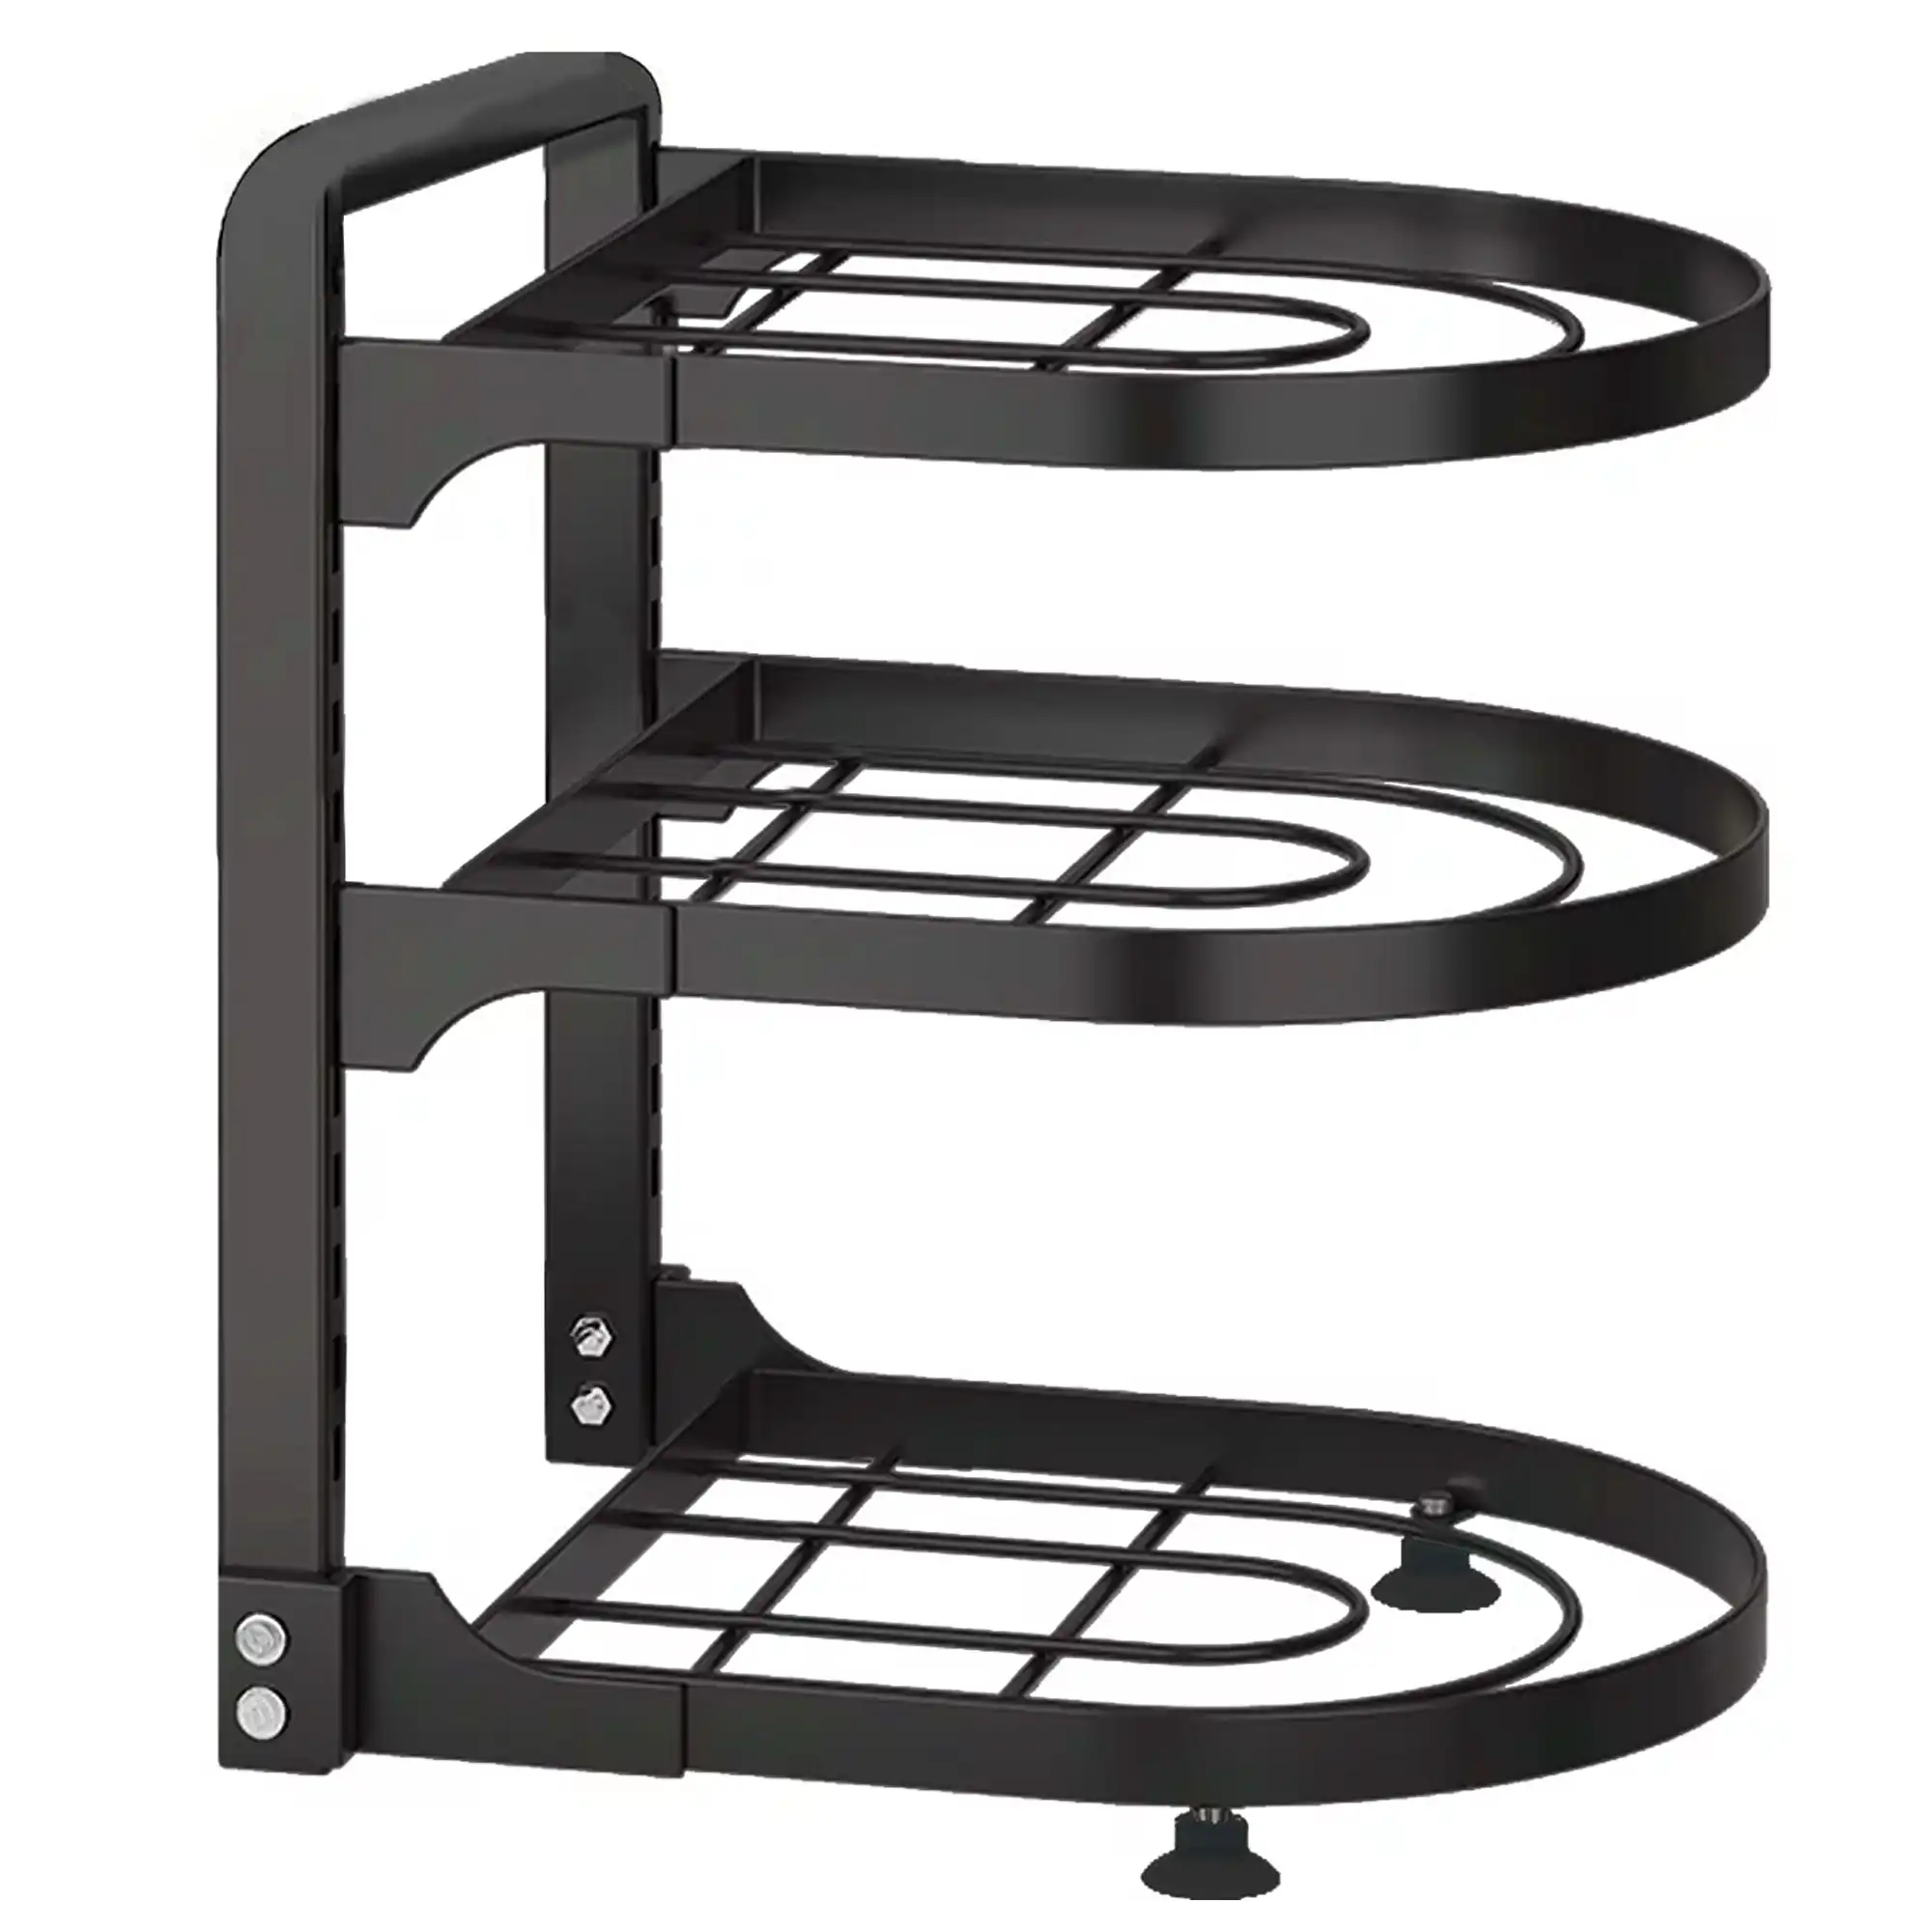 3 Tier Pot Rack Organizer Pan Storage Shelf Adjustable Shelves Lid Holder Wall Mountable